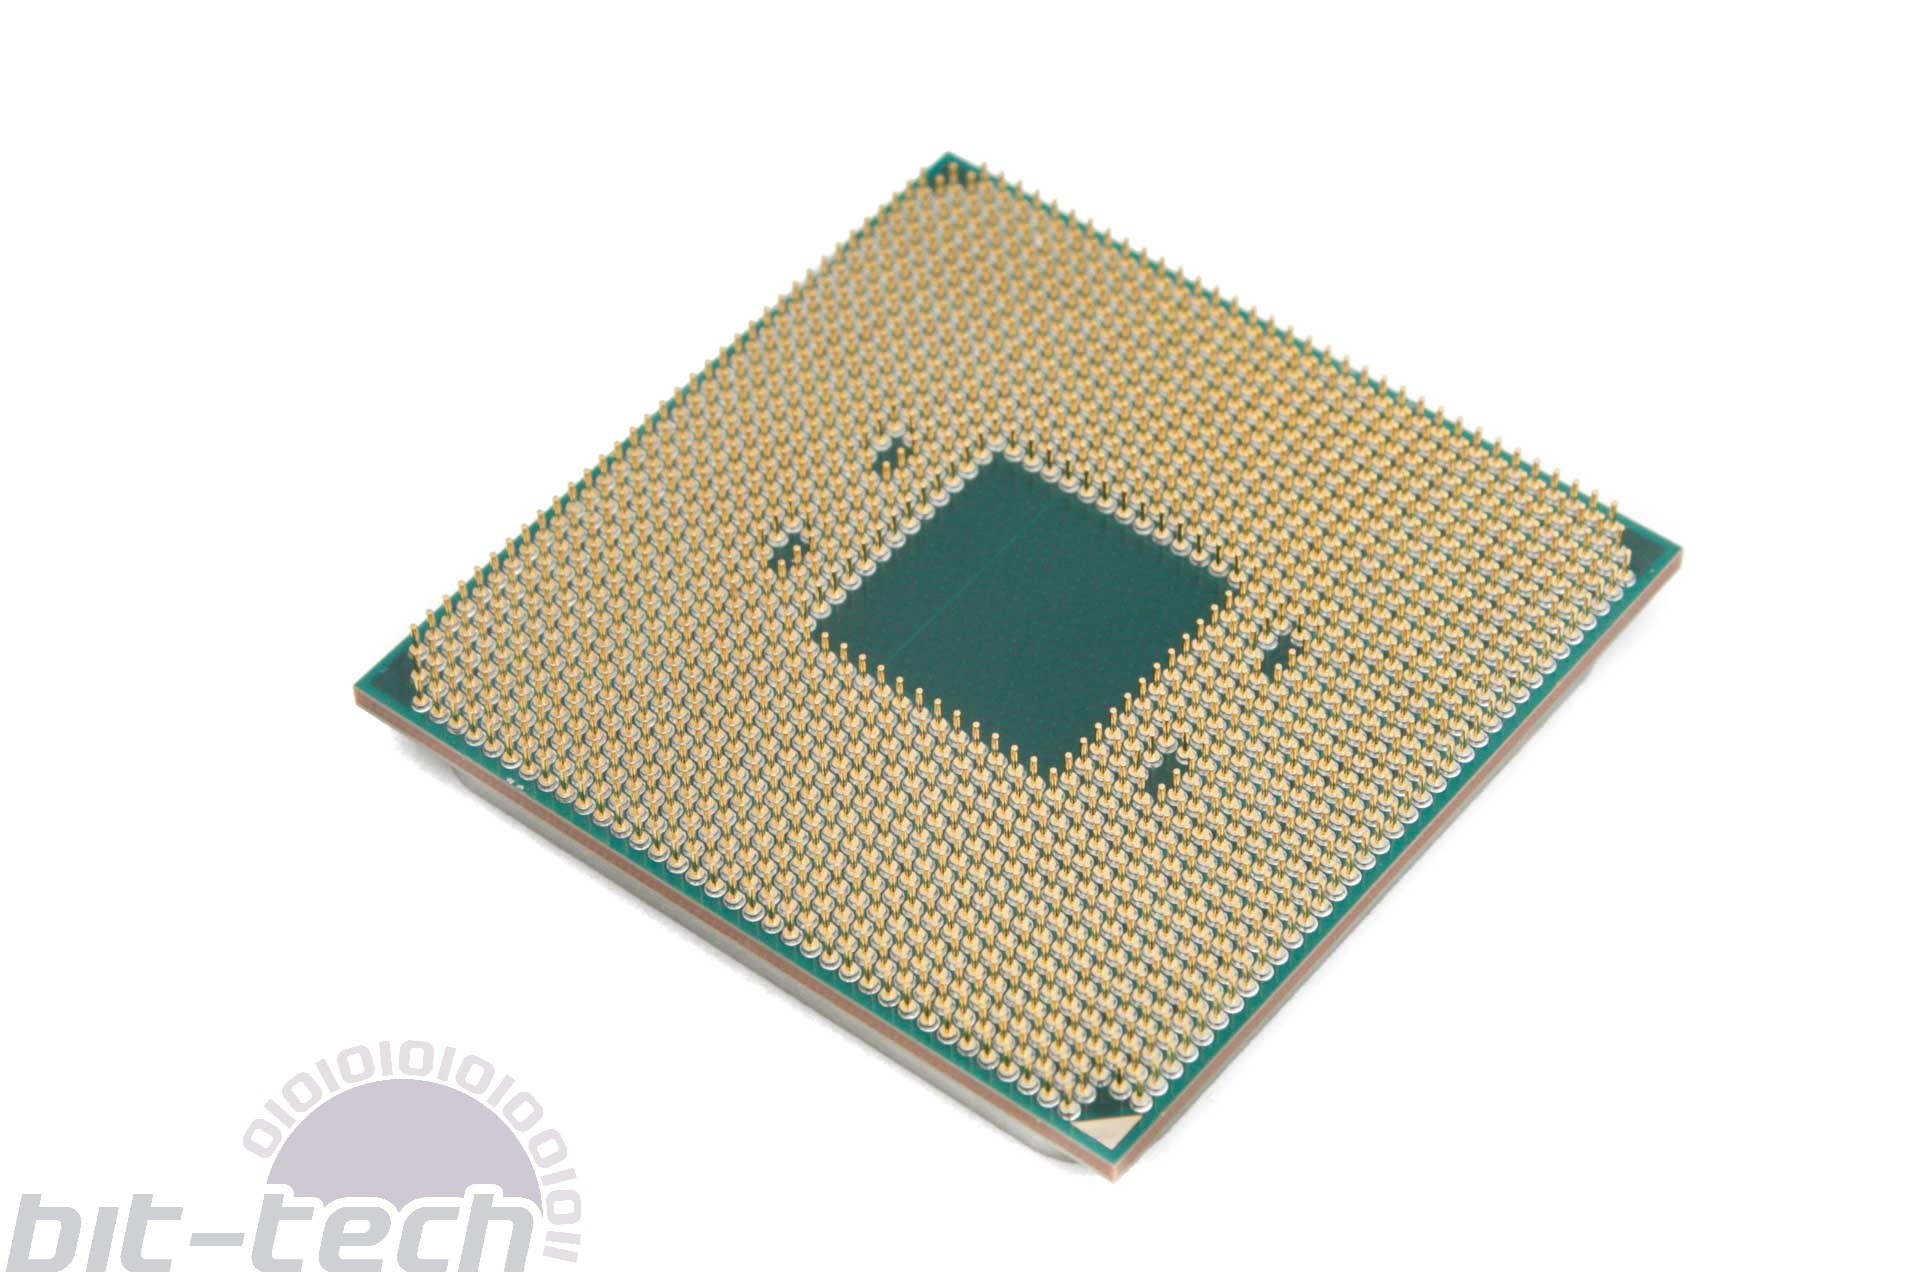 AMD Ryzen 5 3600 CPU - allnightpress.com